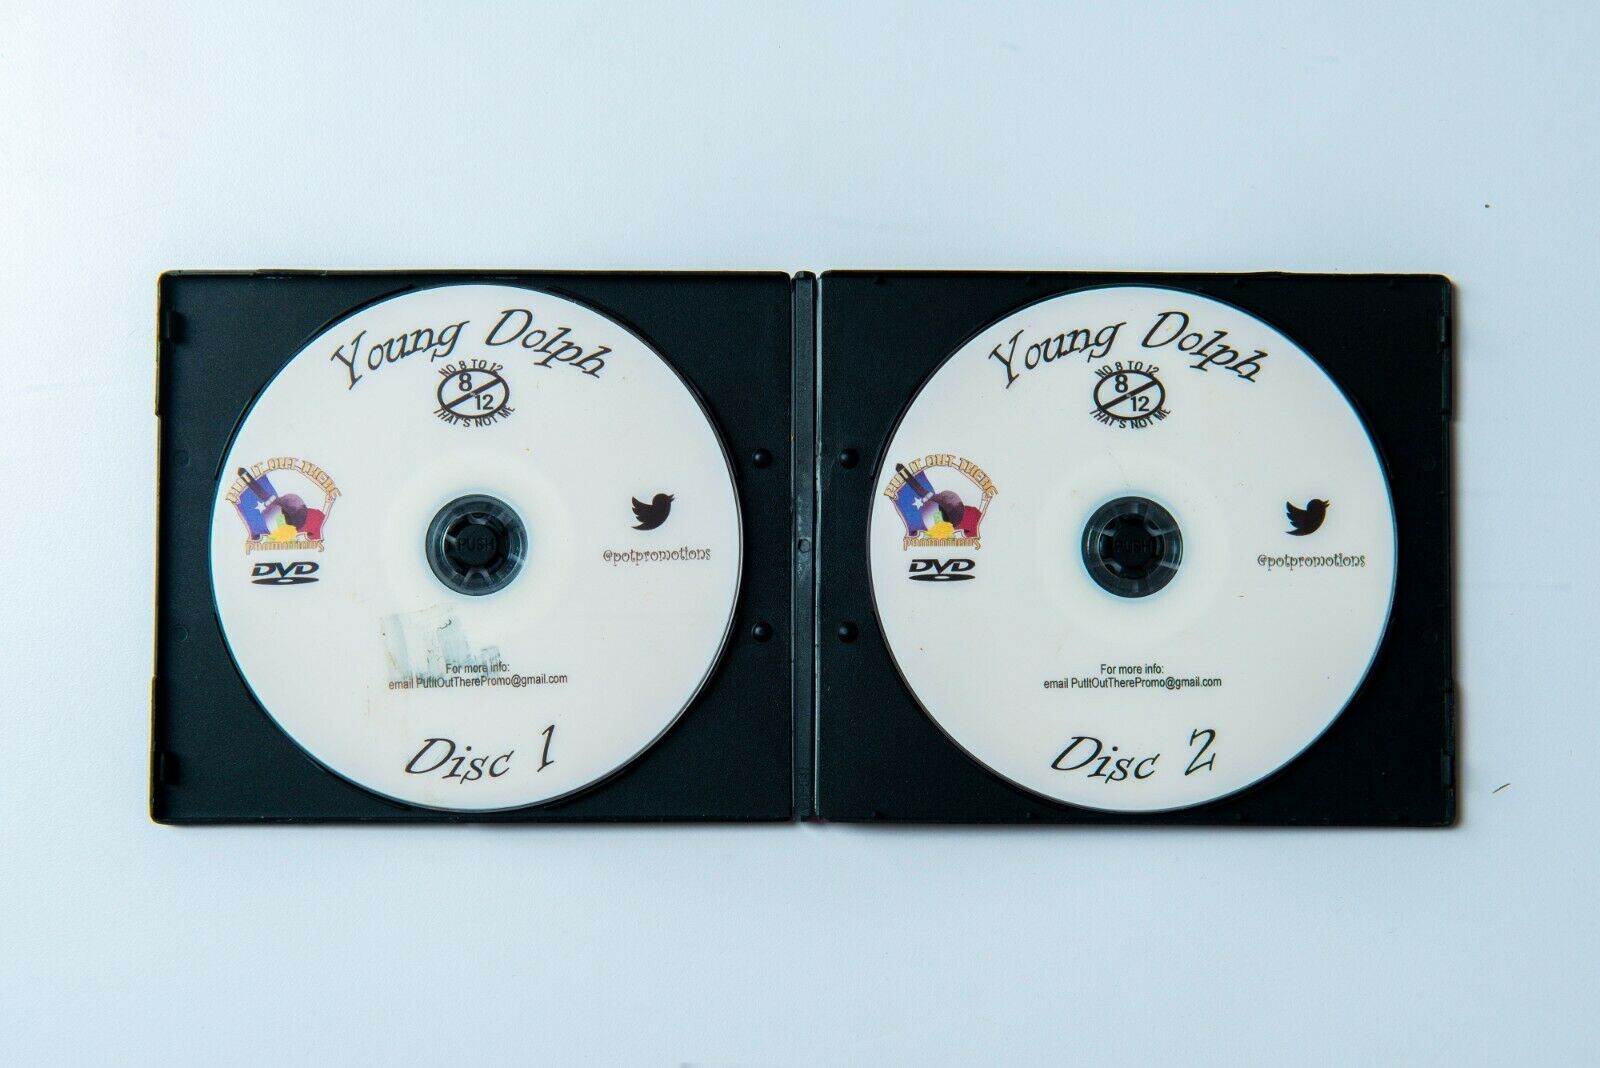 VERY RARE Young Dolph Promo Rap Memphis  No8to12TV Music Video 2 Disc CD DVD RIP